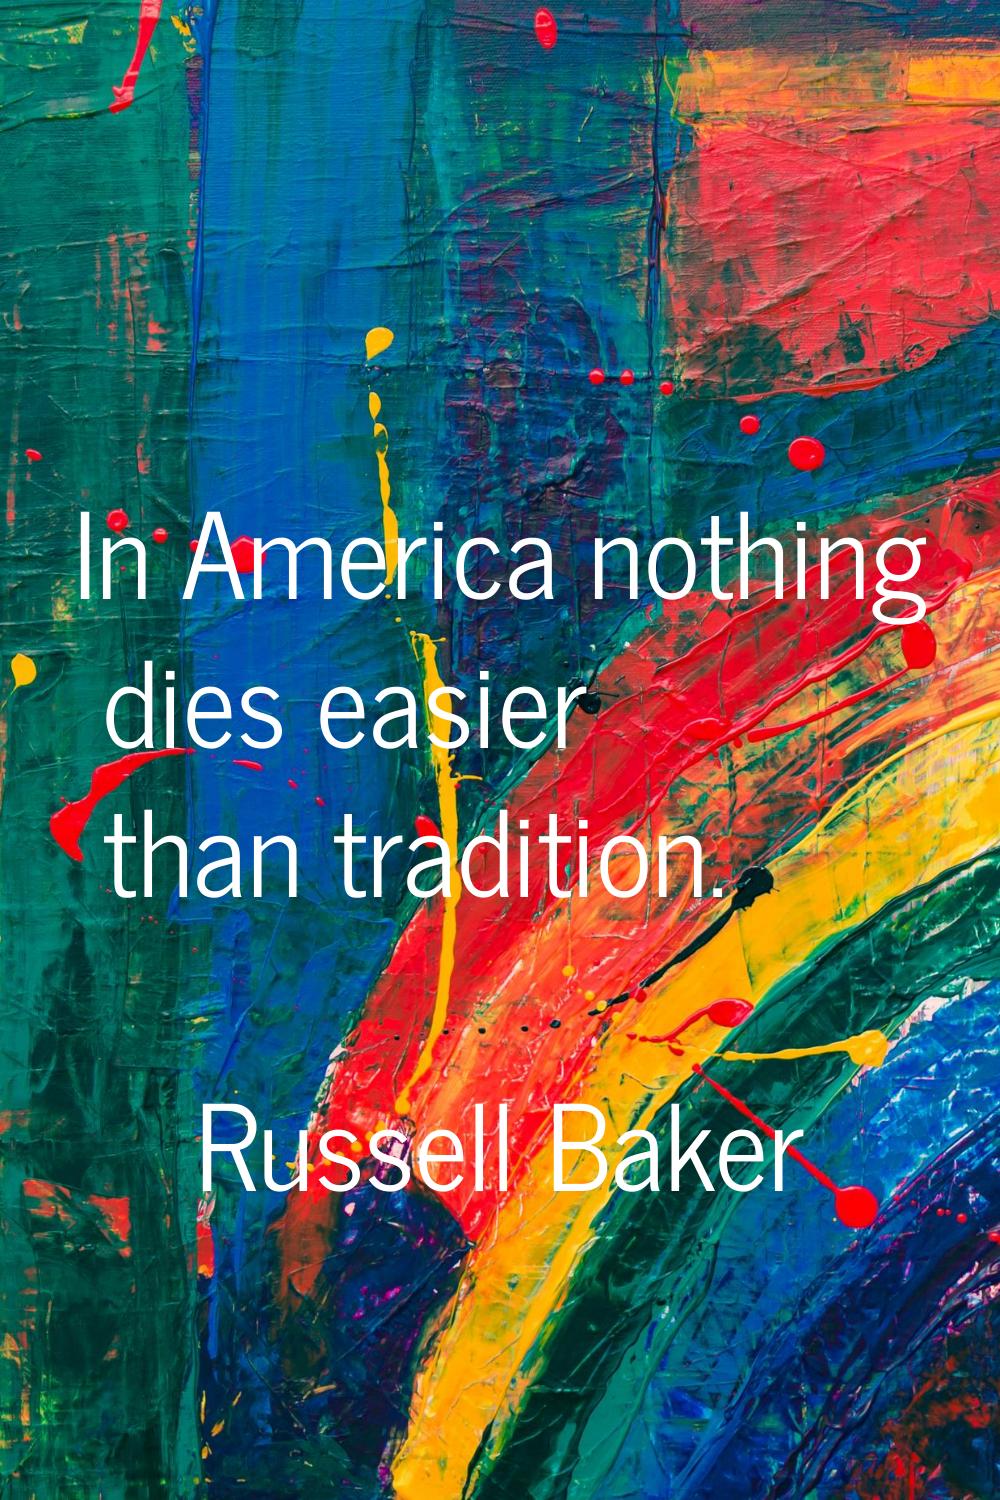 In America nothing dies easier than tradition.